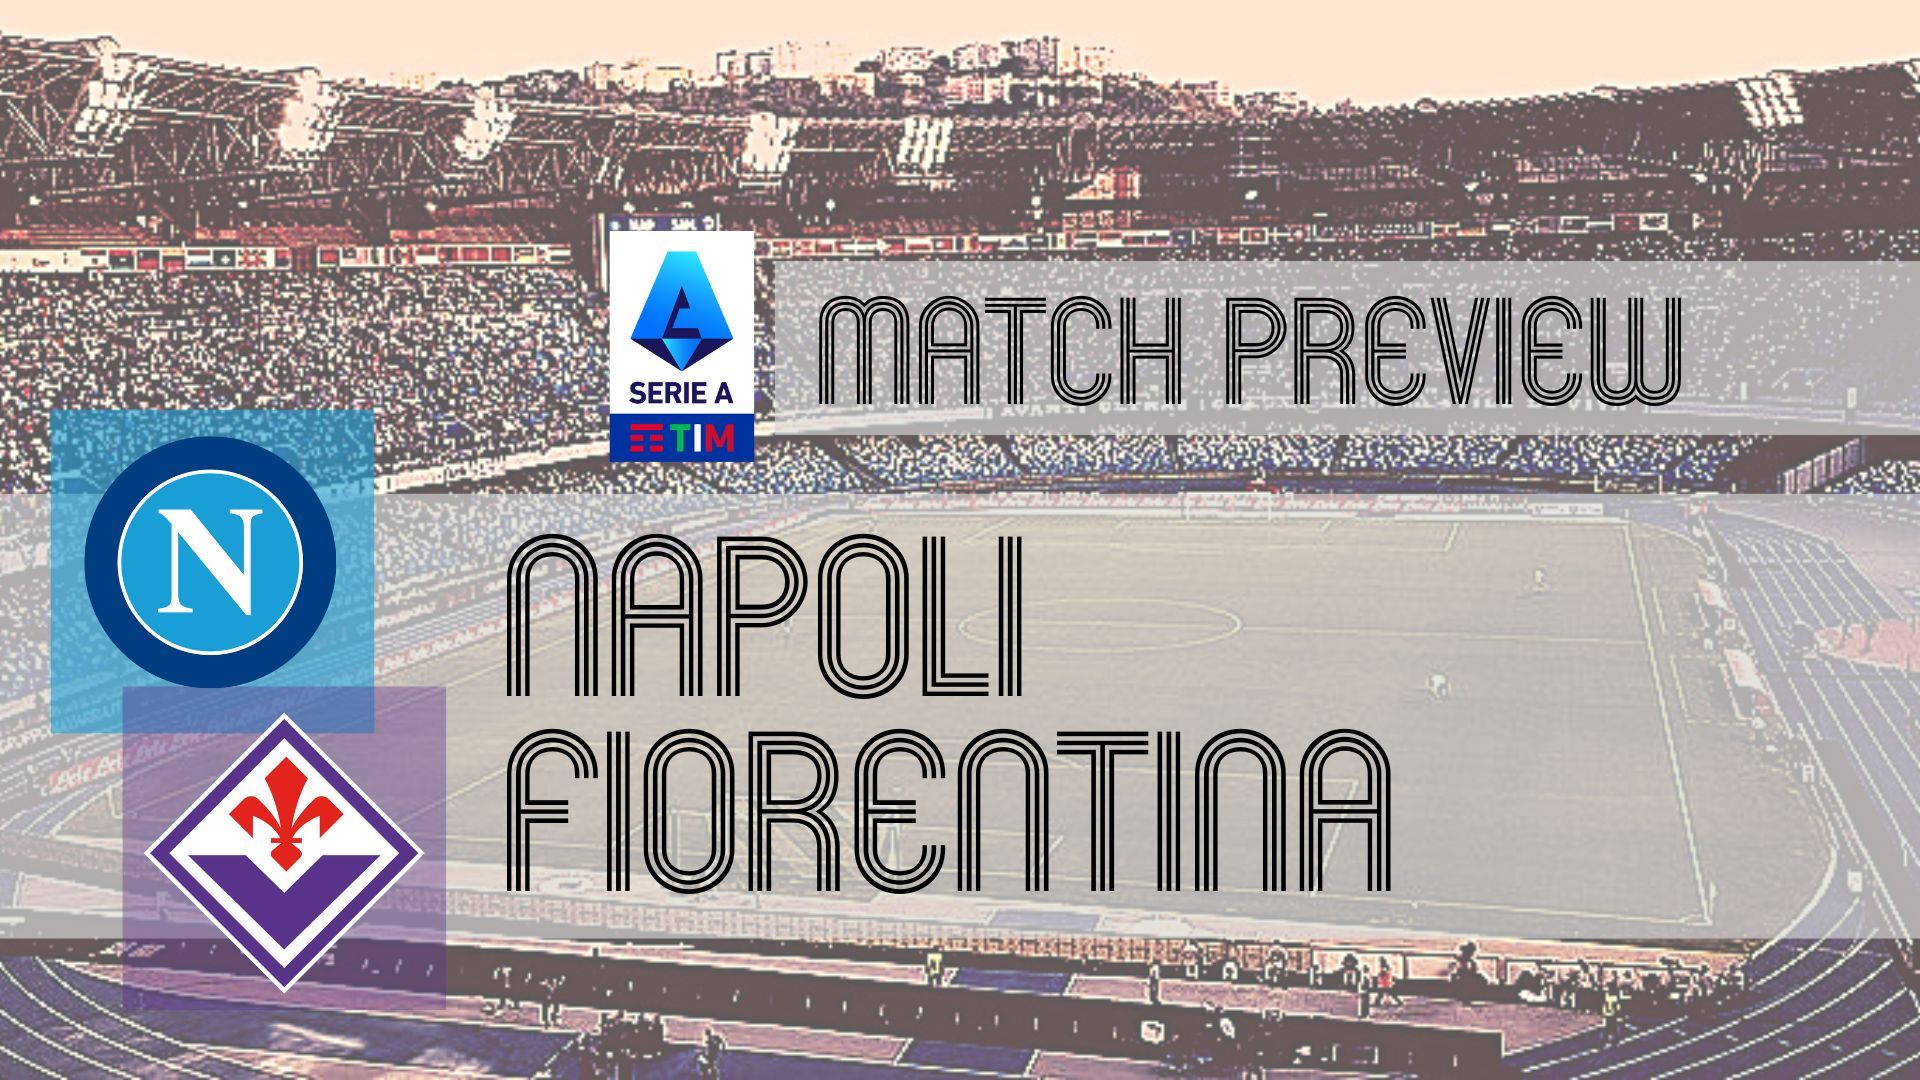 Ferencvaros vs Fiorentina - Preview, Free Prediction and Betting